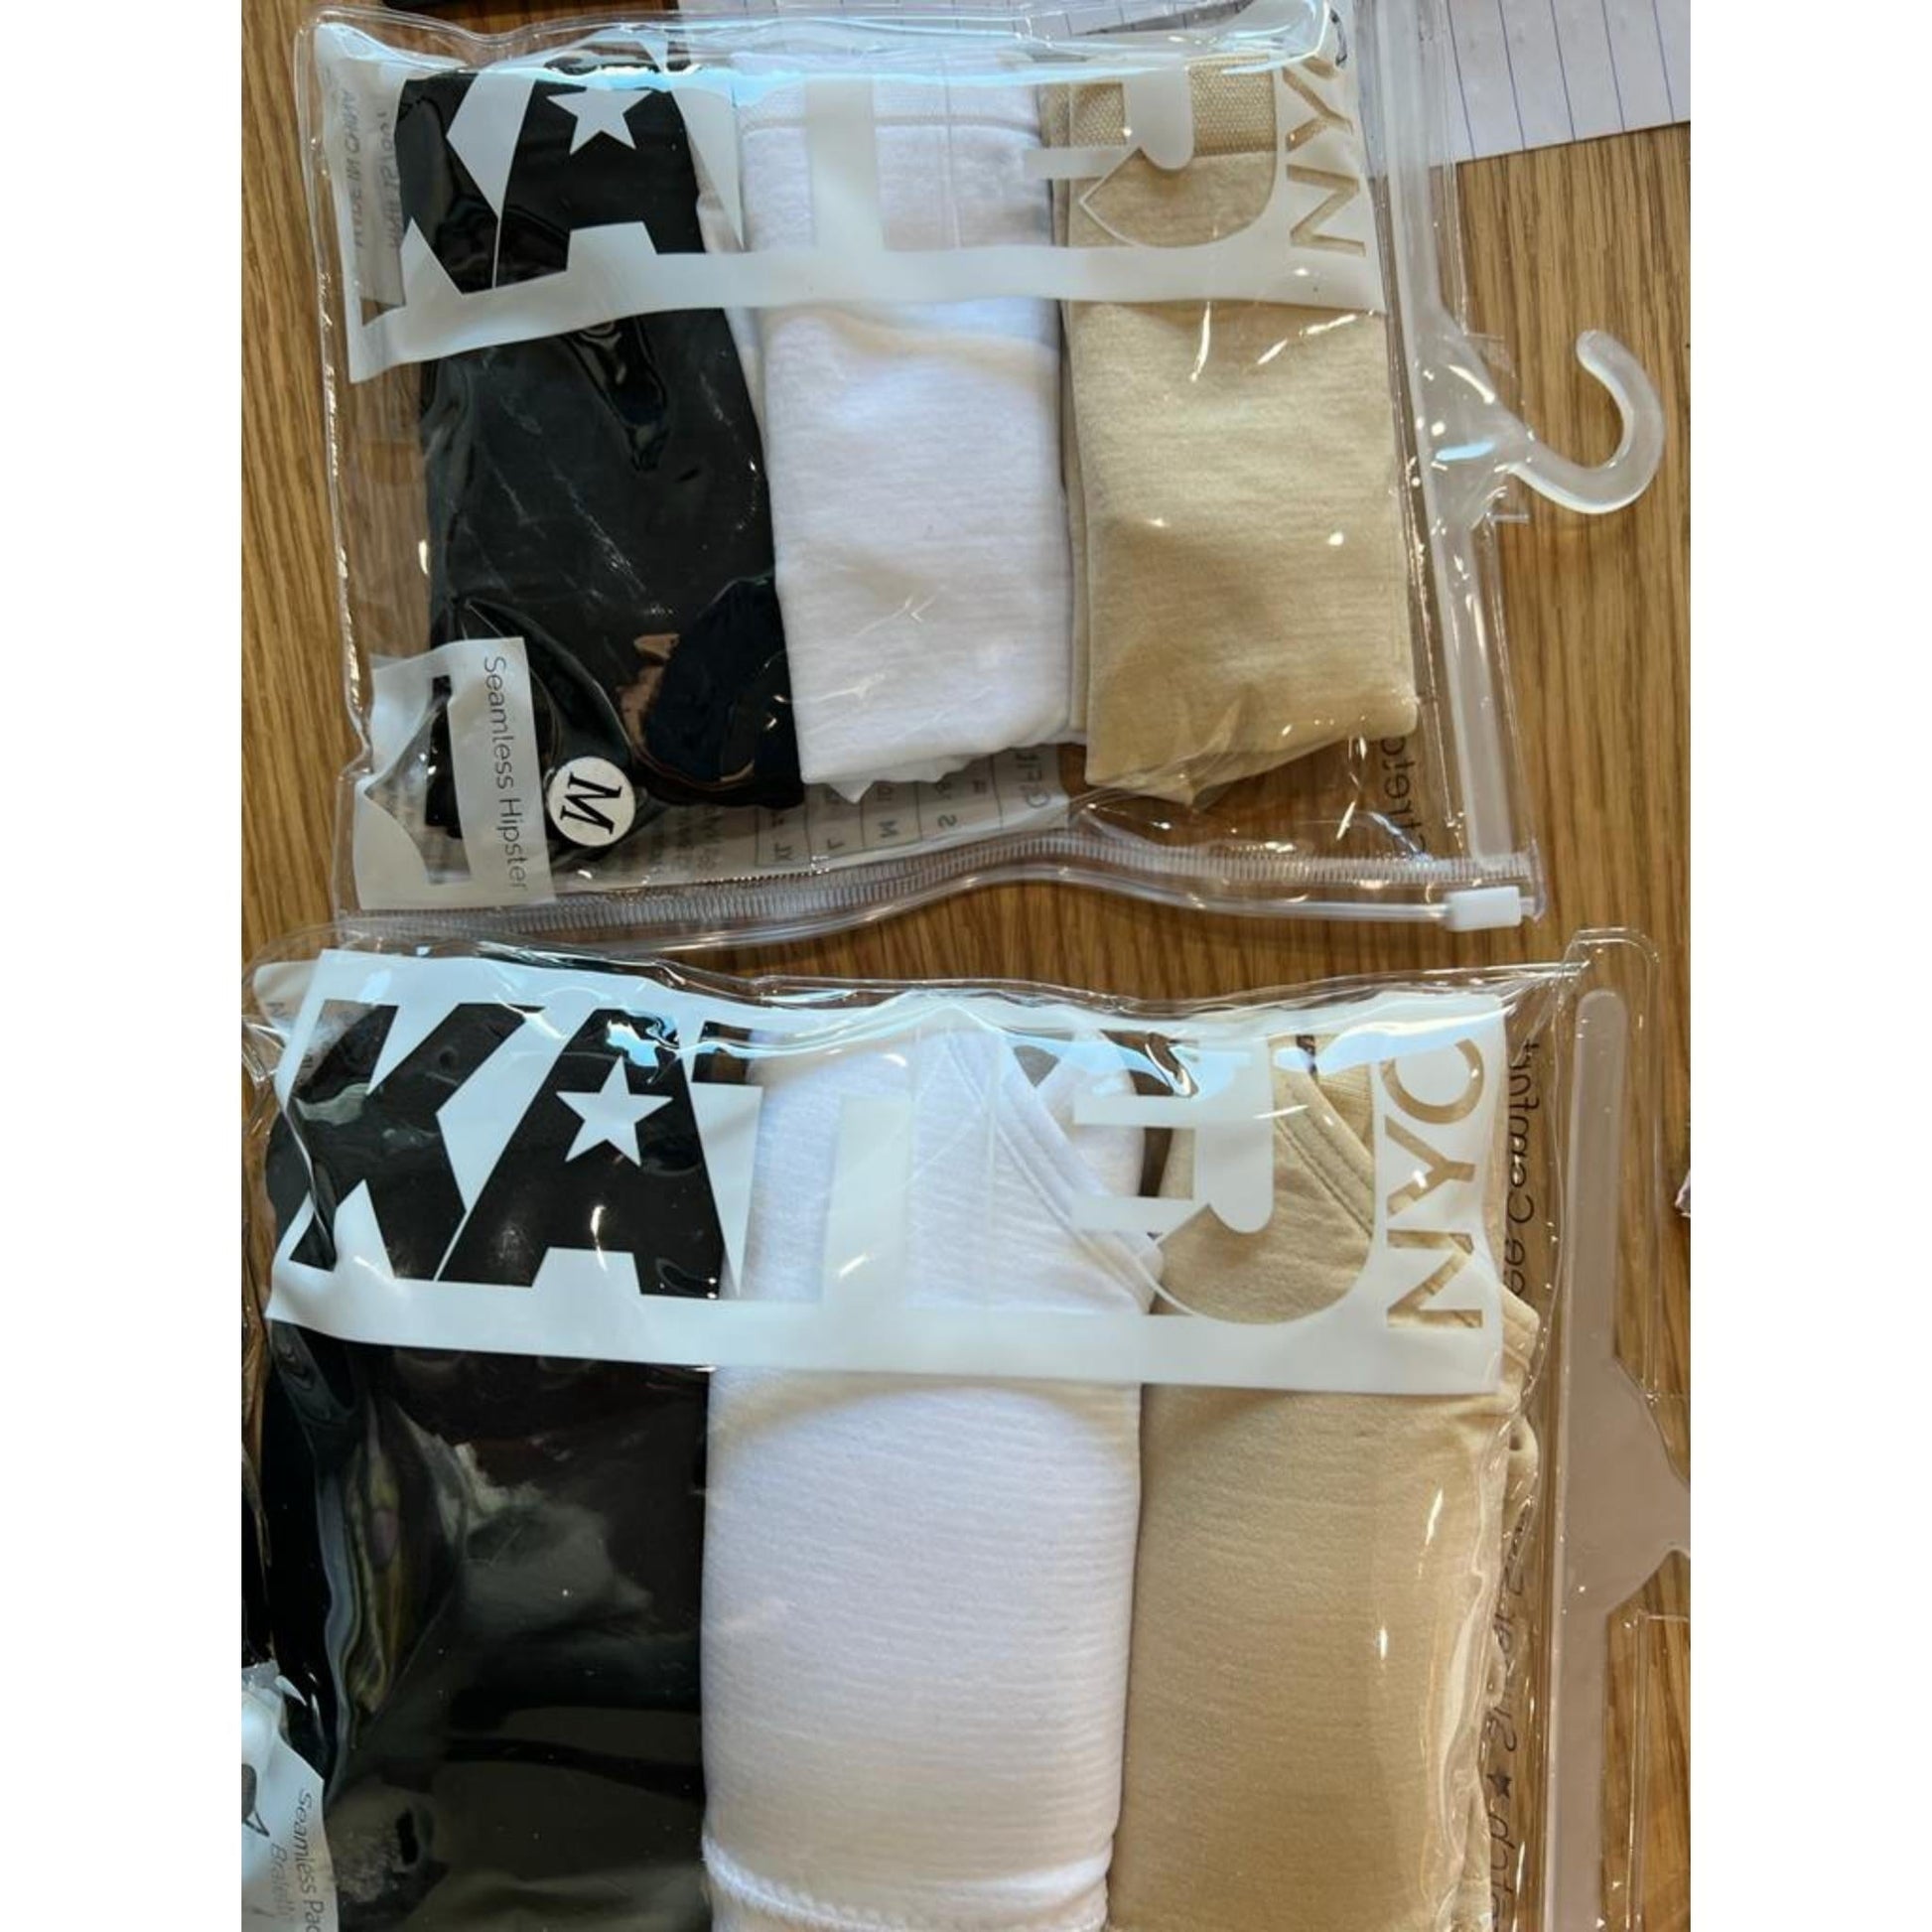 KatieJNYC Assorted Undies - a Spirit Animal - Underwear $30-$45 katie j katiej